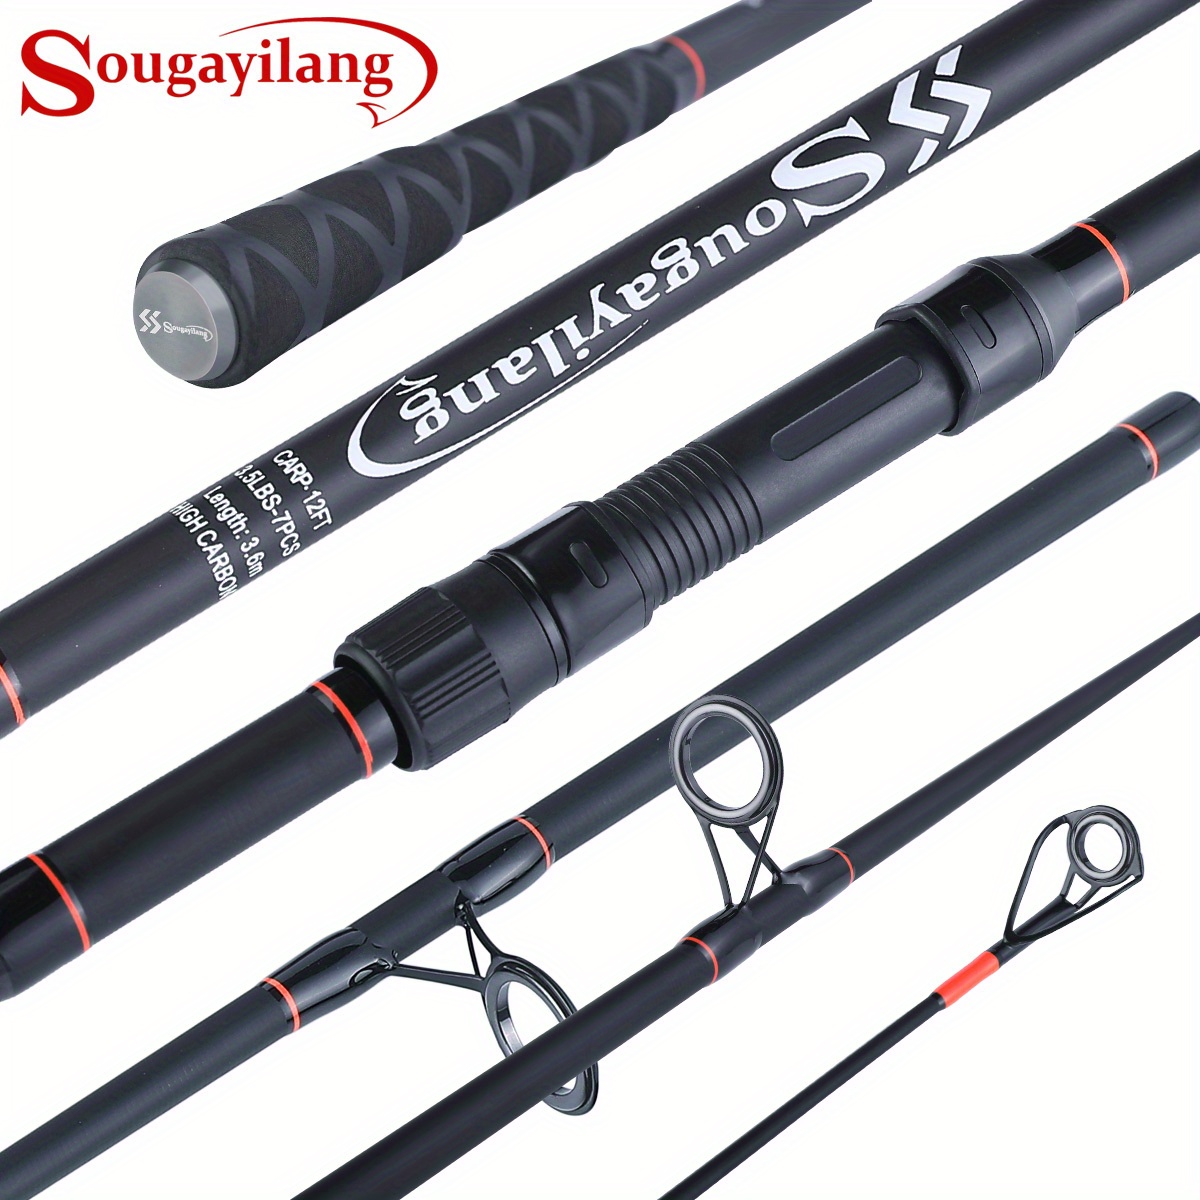 

Sougayilang [for Advanced Anglers] Fishing Rod Carbon Fiber Carp Rod, 3m/9.84ft 3.6m/11.81ft 6/7-piece Fishing Pole, Comfortable Handle For Carp Fishing